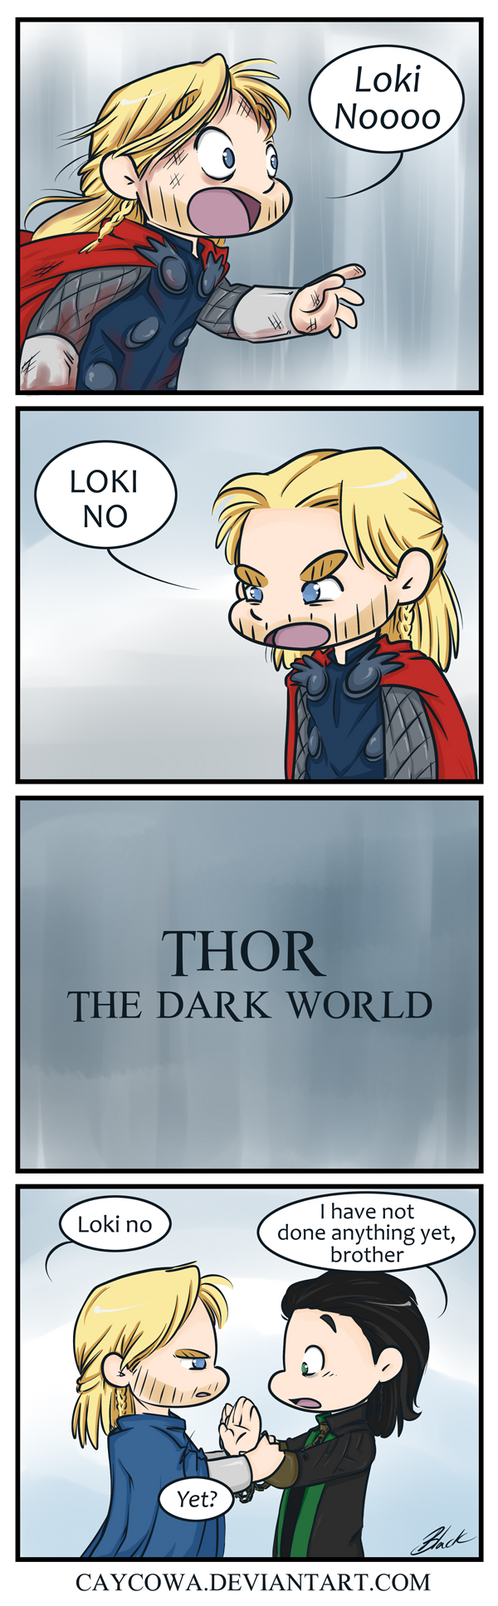 Thor: The Dark World by caycowa on DeviantArt